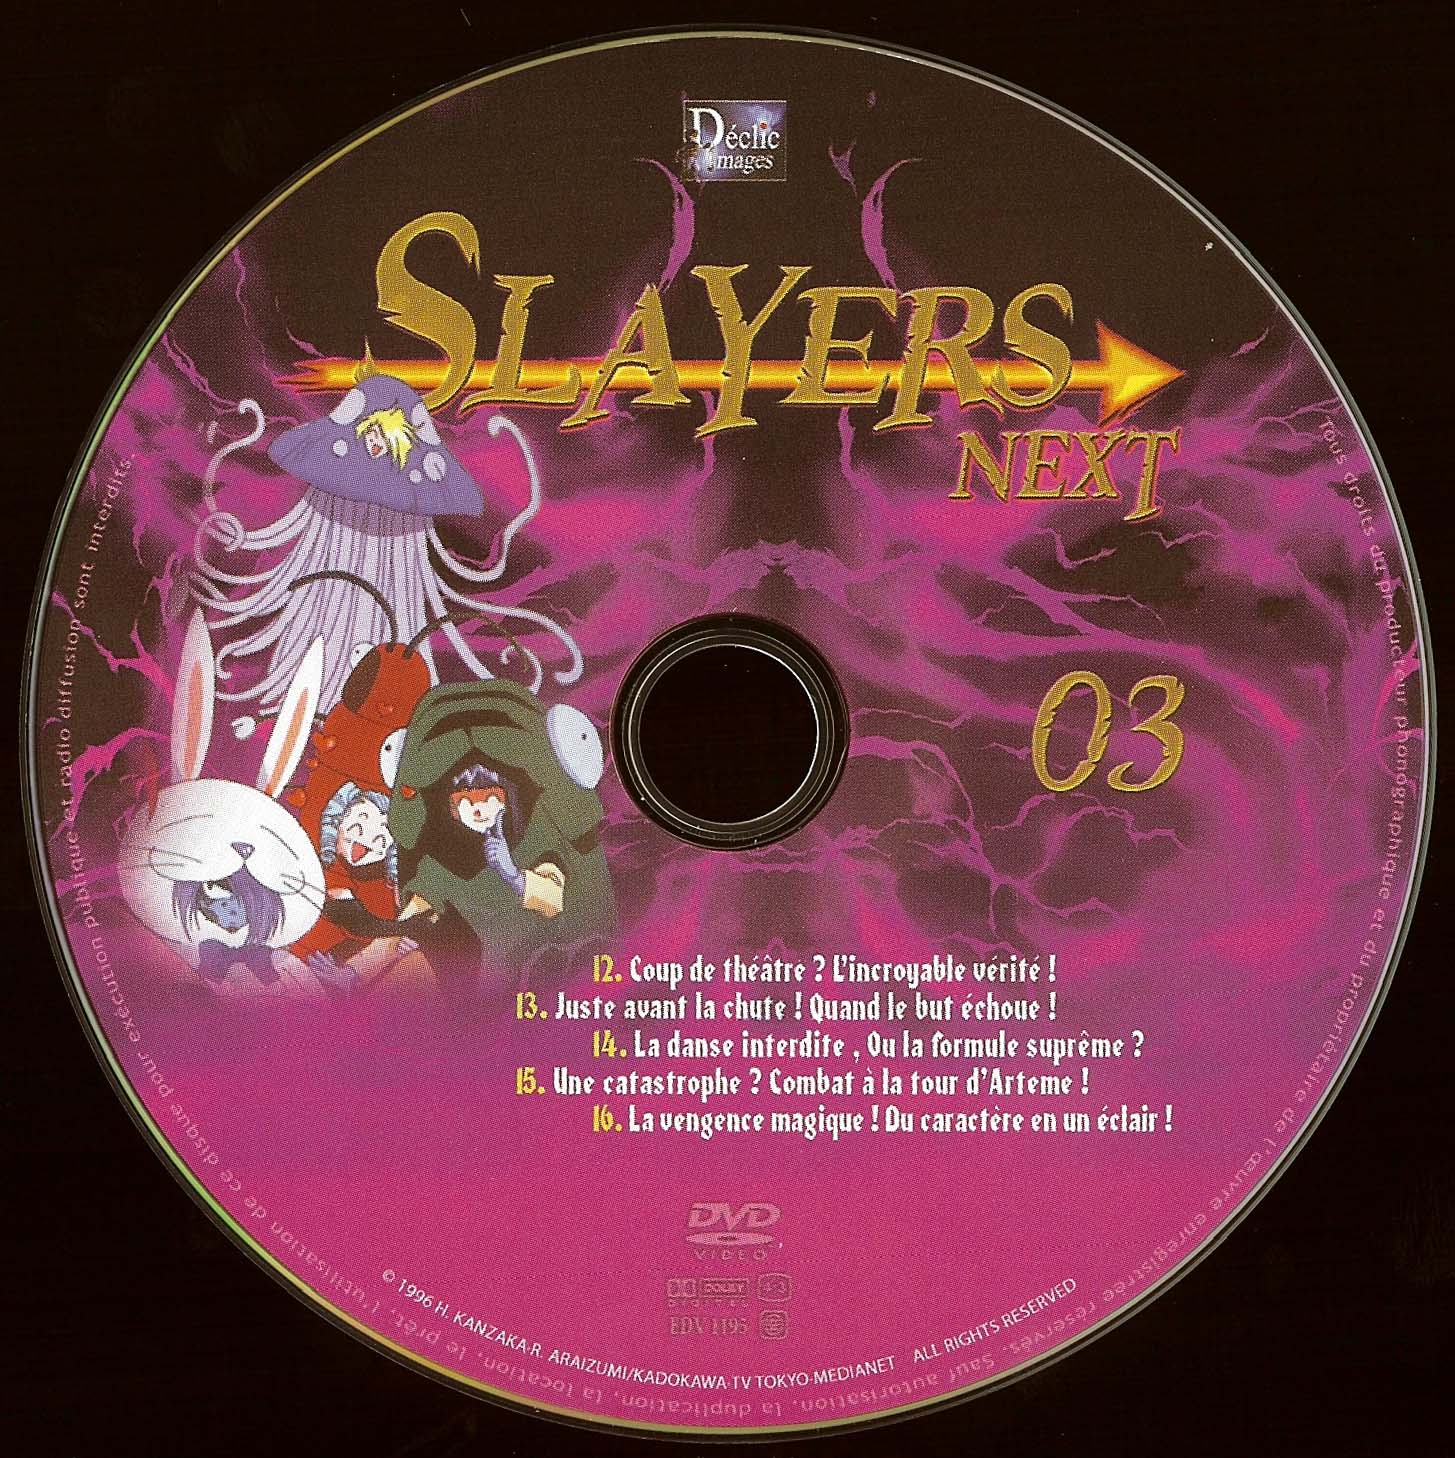 Slayers next DISC 3